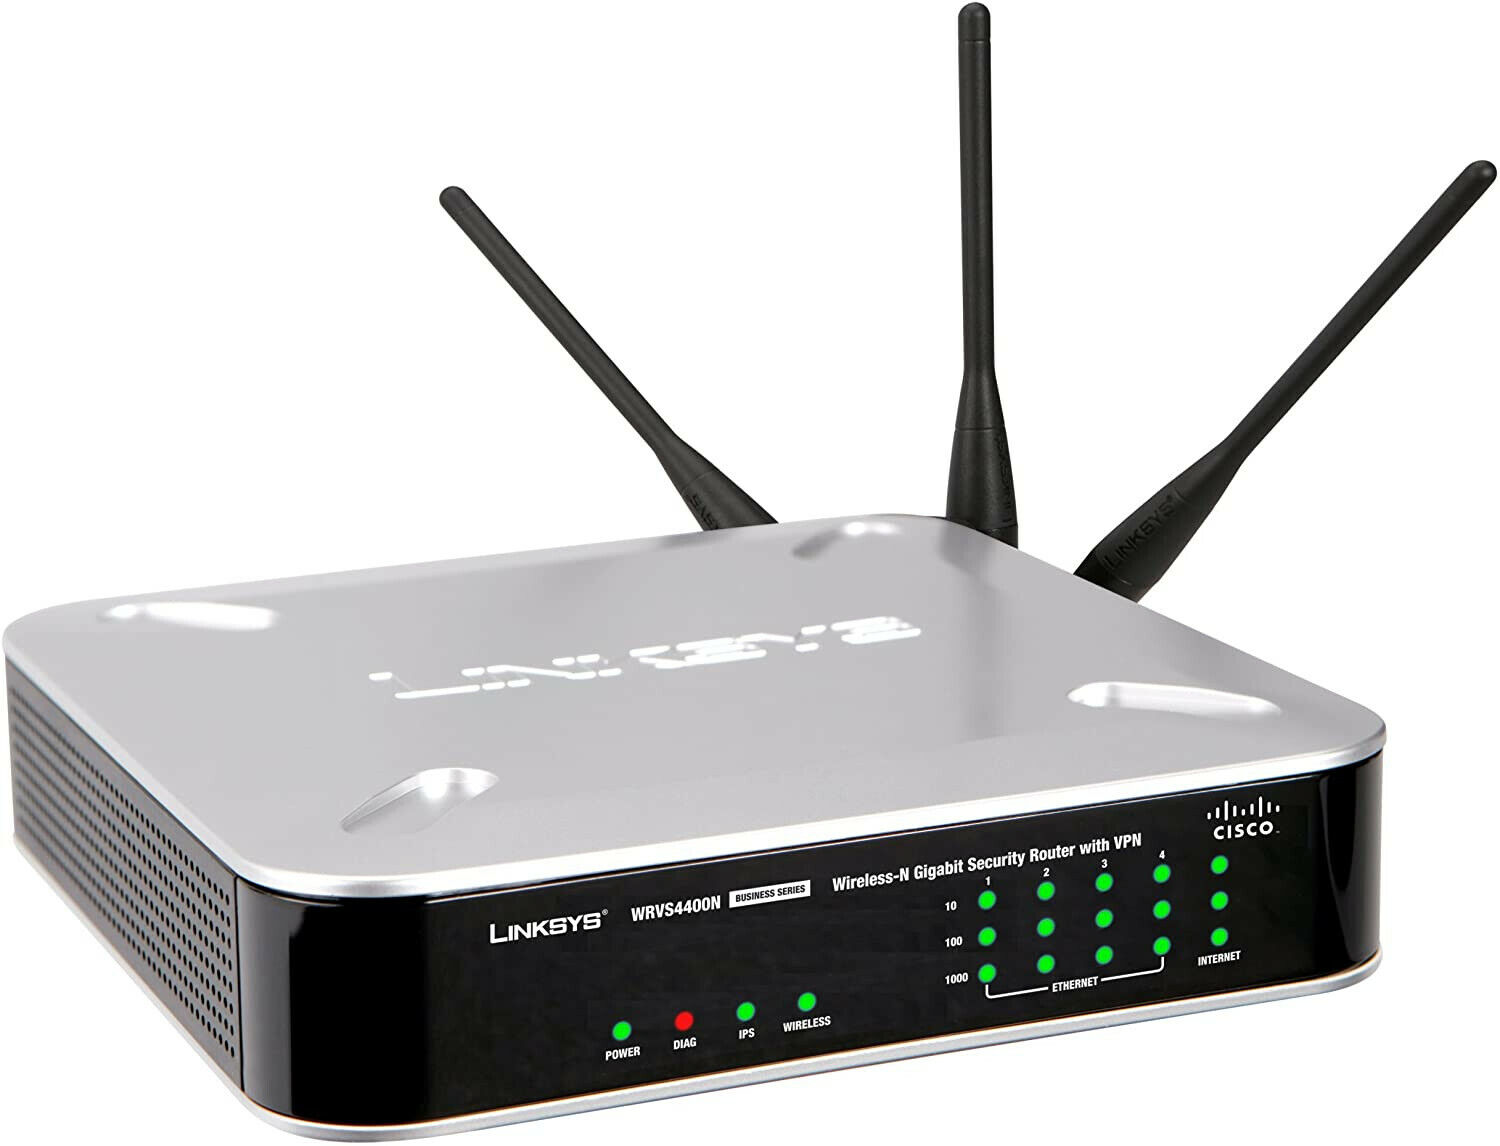 Cisco-Linksys WRVS4400N Wireless-N GigaBit Security Router,VPN v2.0 *NEW IN BOX*